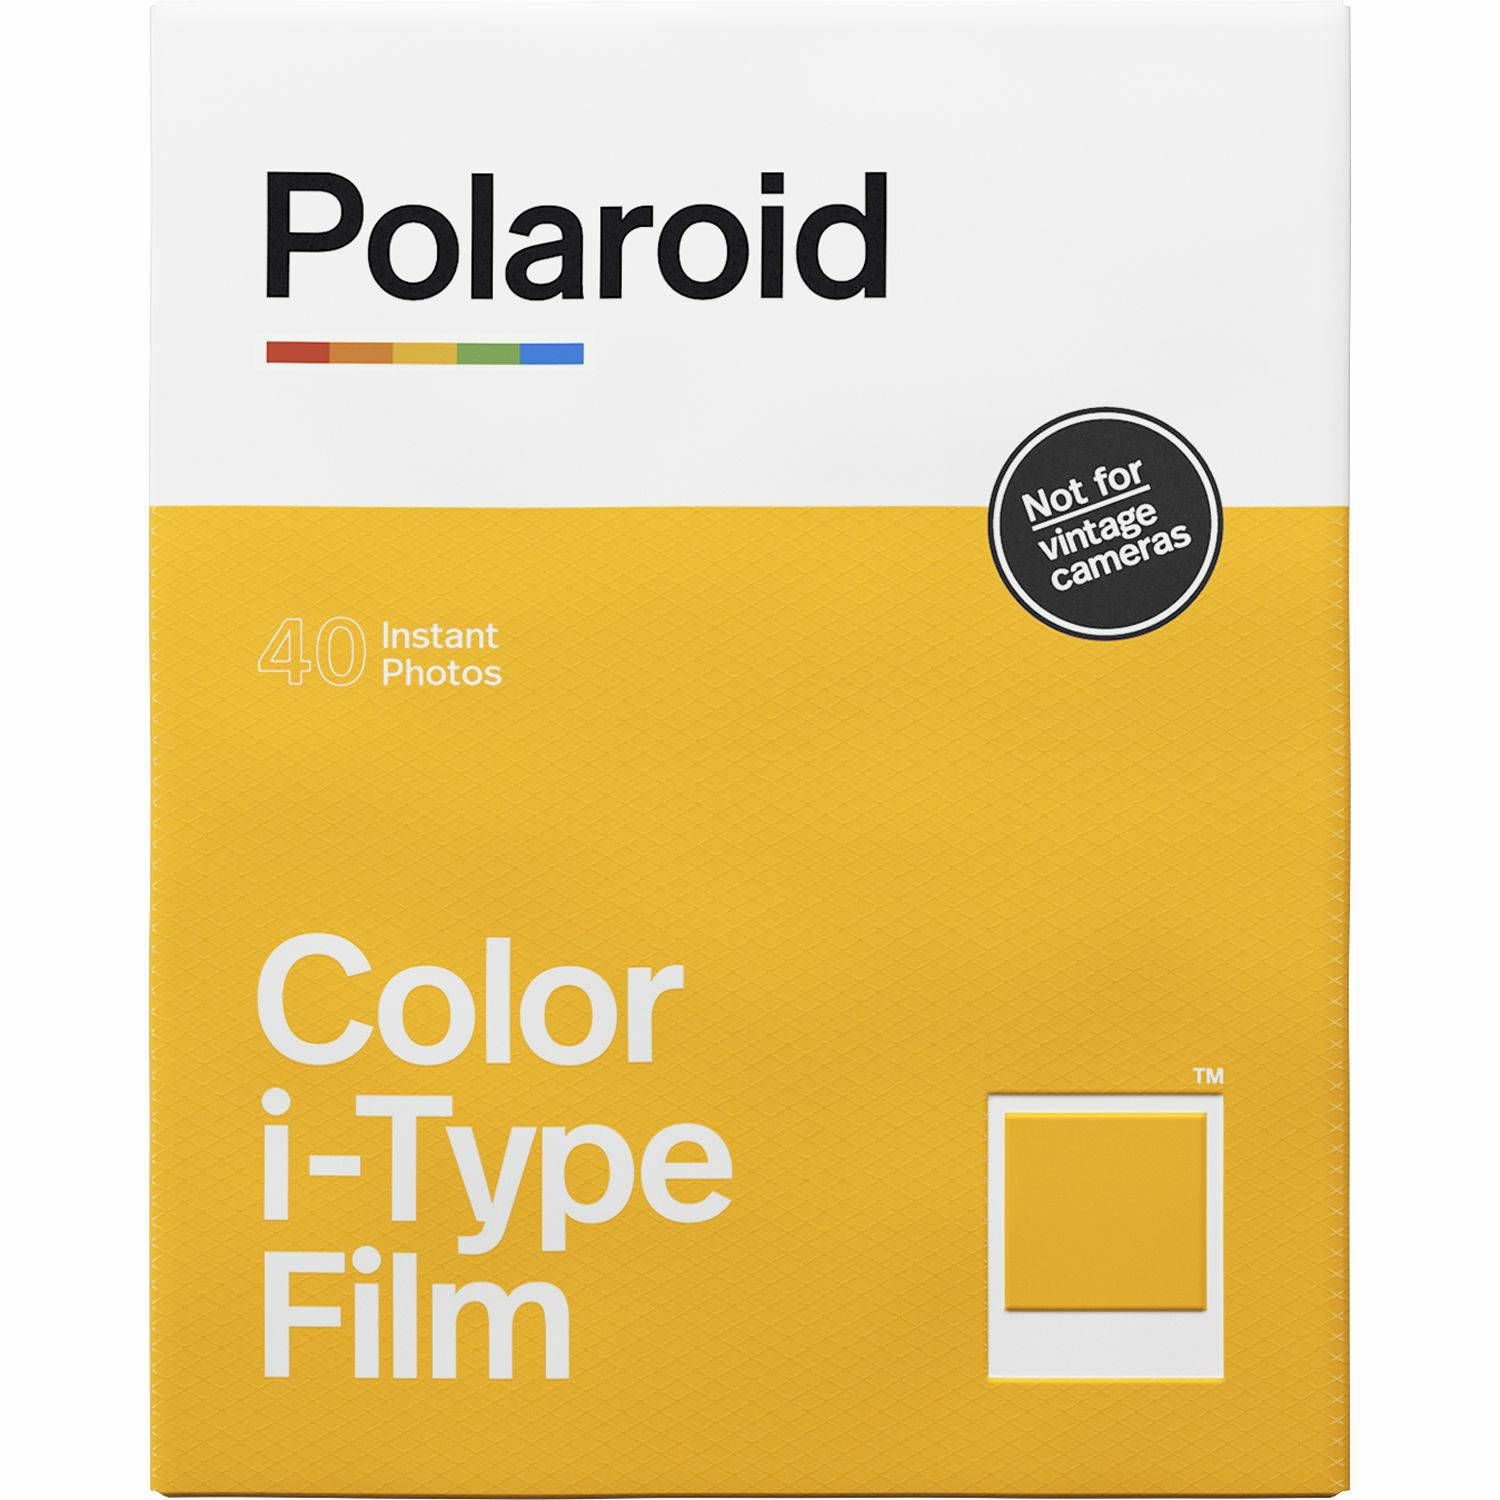 Polaroid Originals Color film for i-Type x40 film pack foto papir za fotografije u boji za Instant fotoaparate (006010)